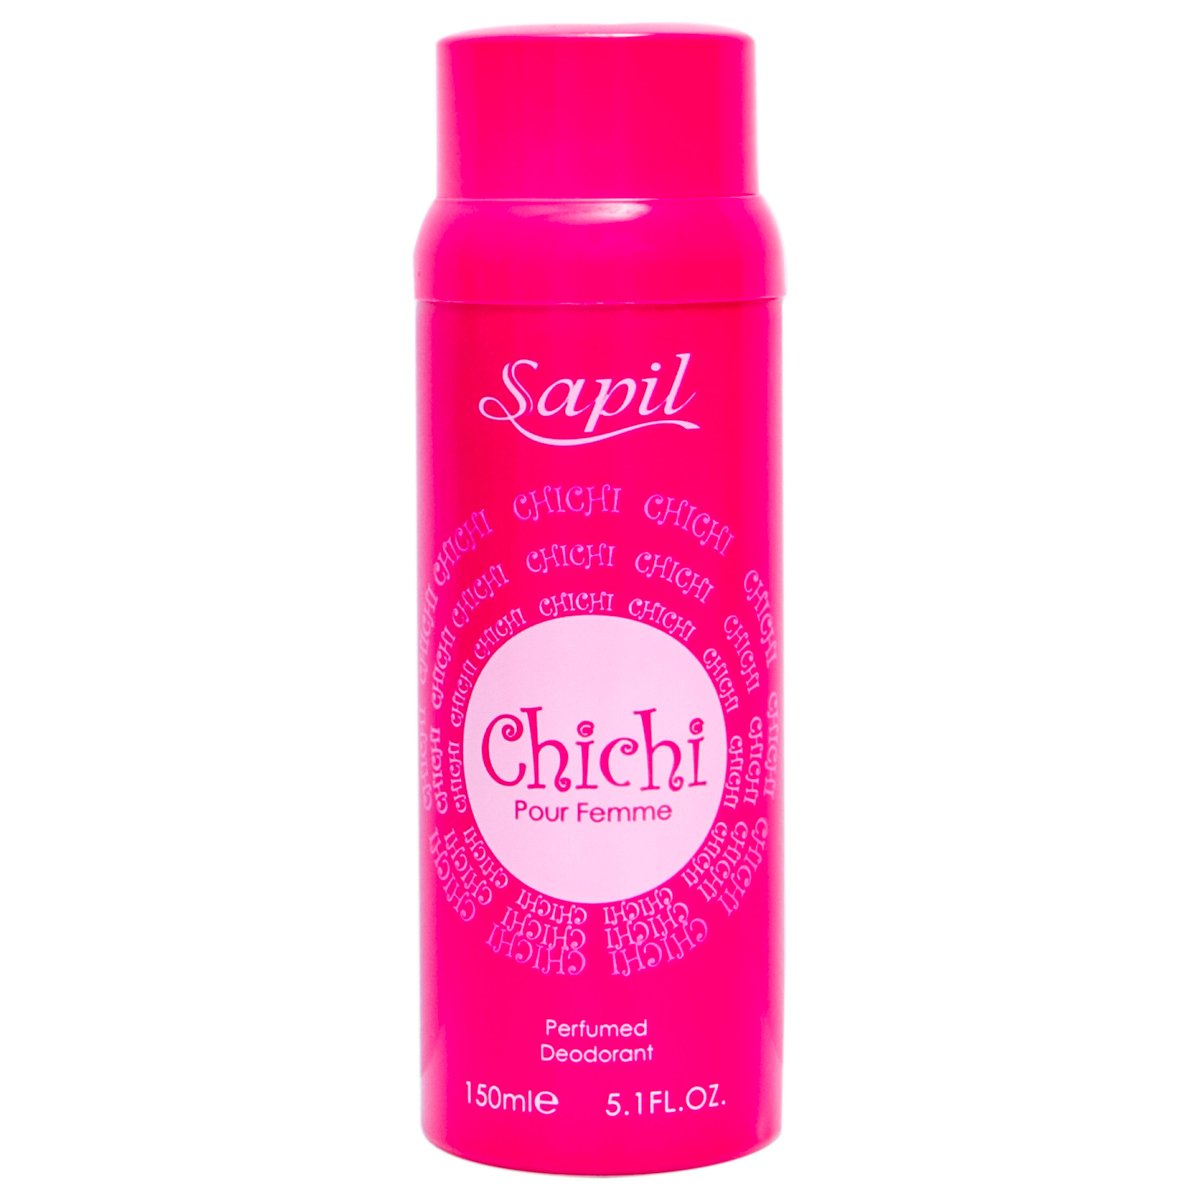 Sapil Chichi Pour Femme Perfumed Deodorant for Women, 150 ml